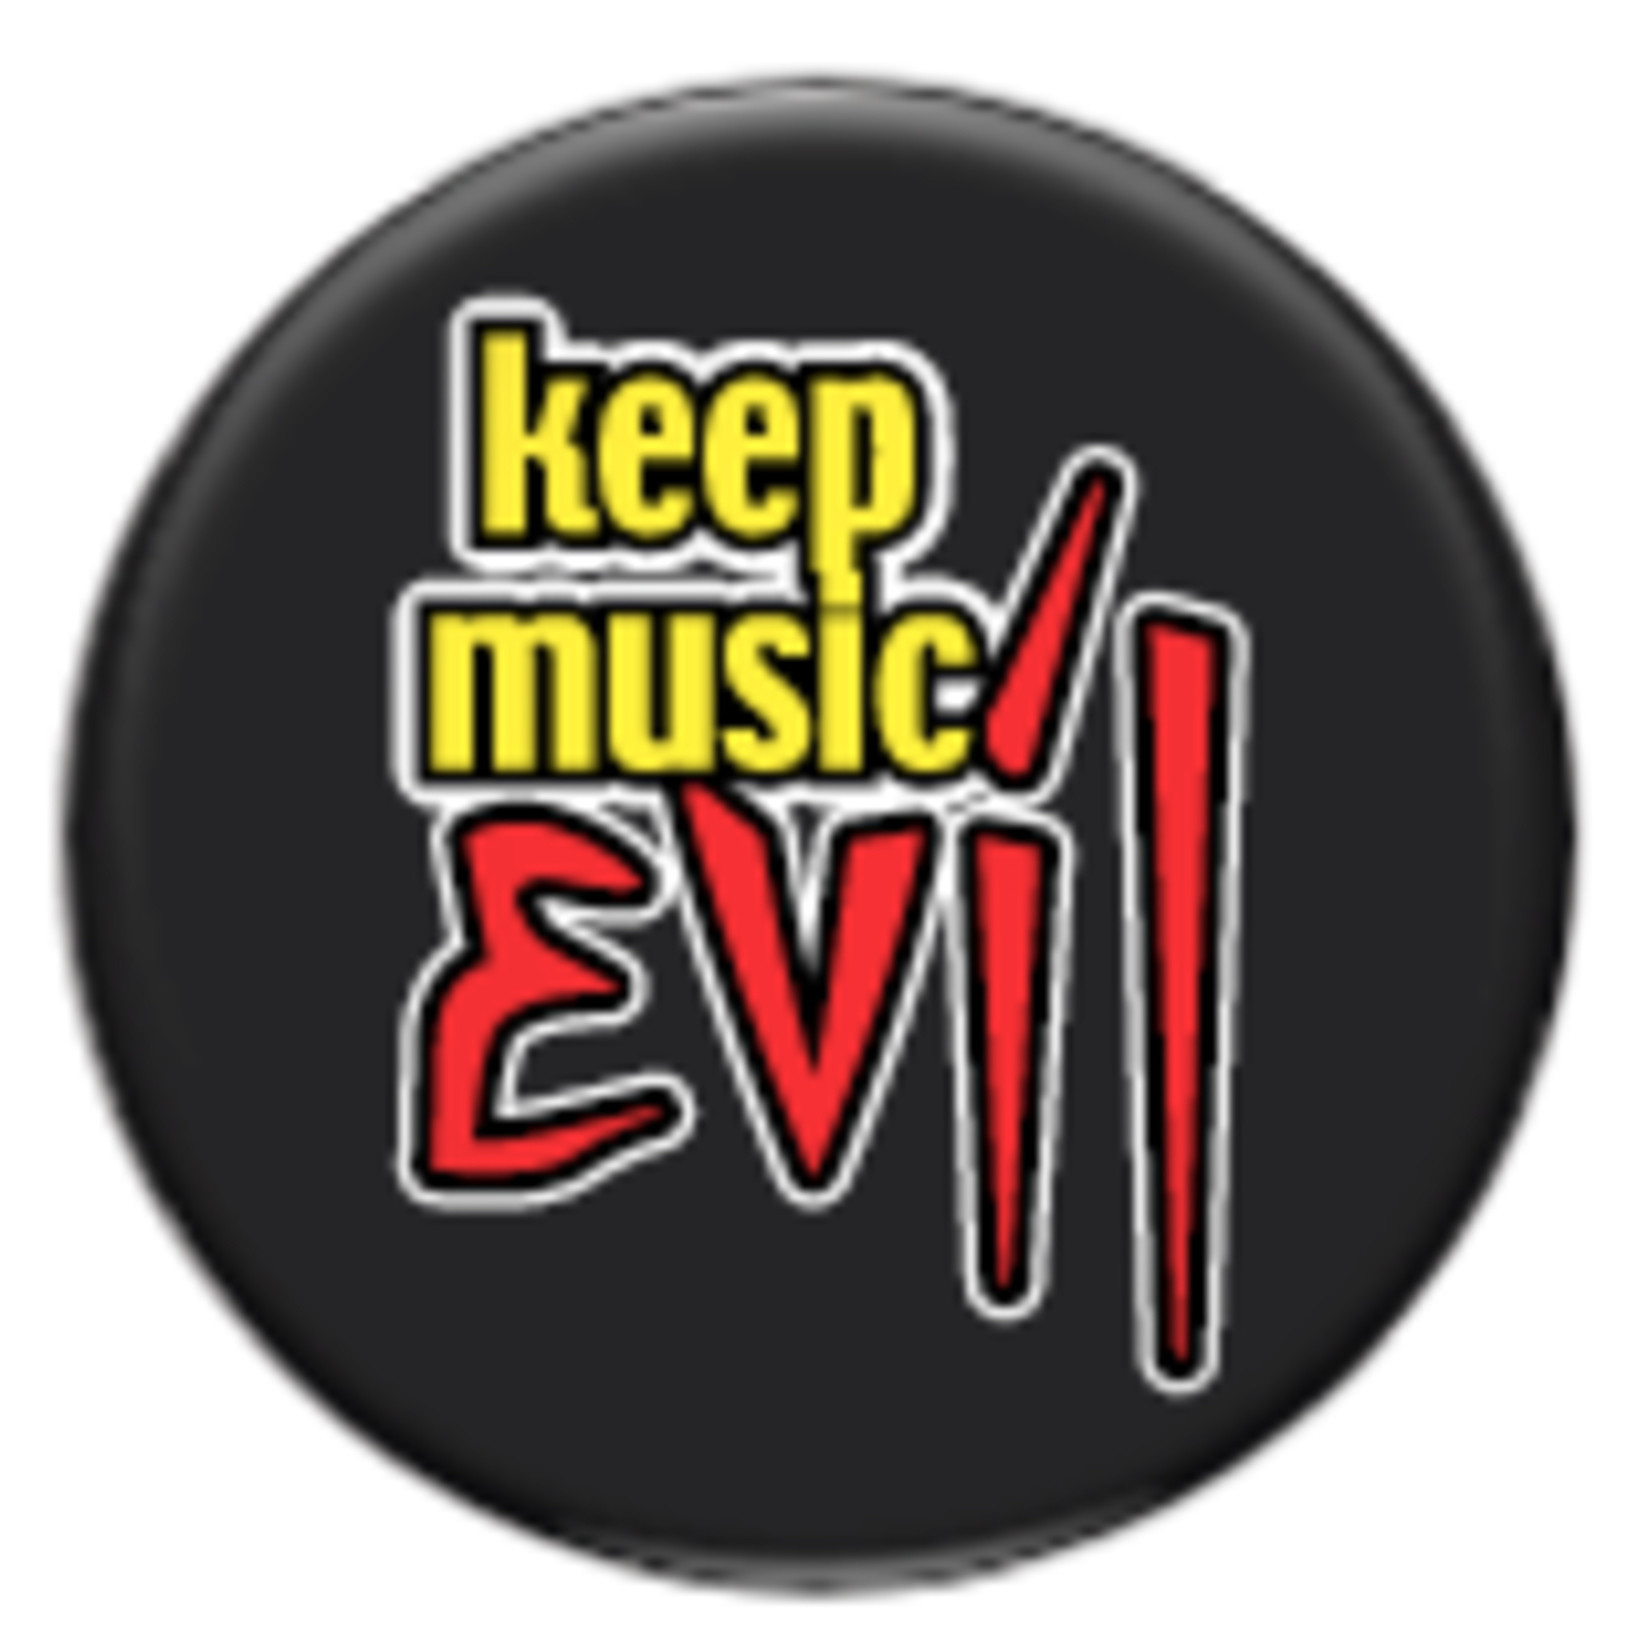 Magnet - Keep Music Evil